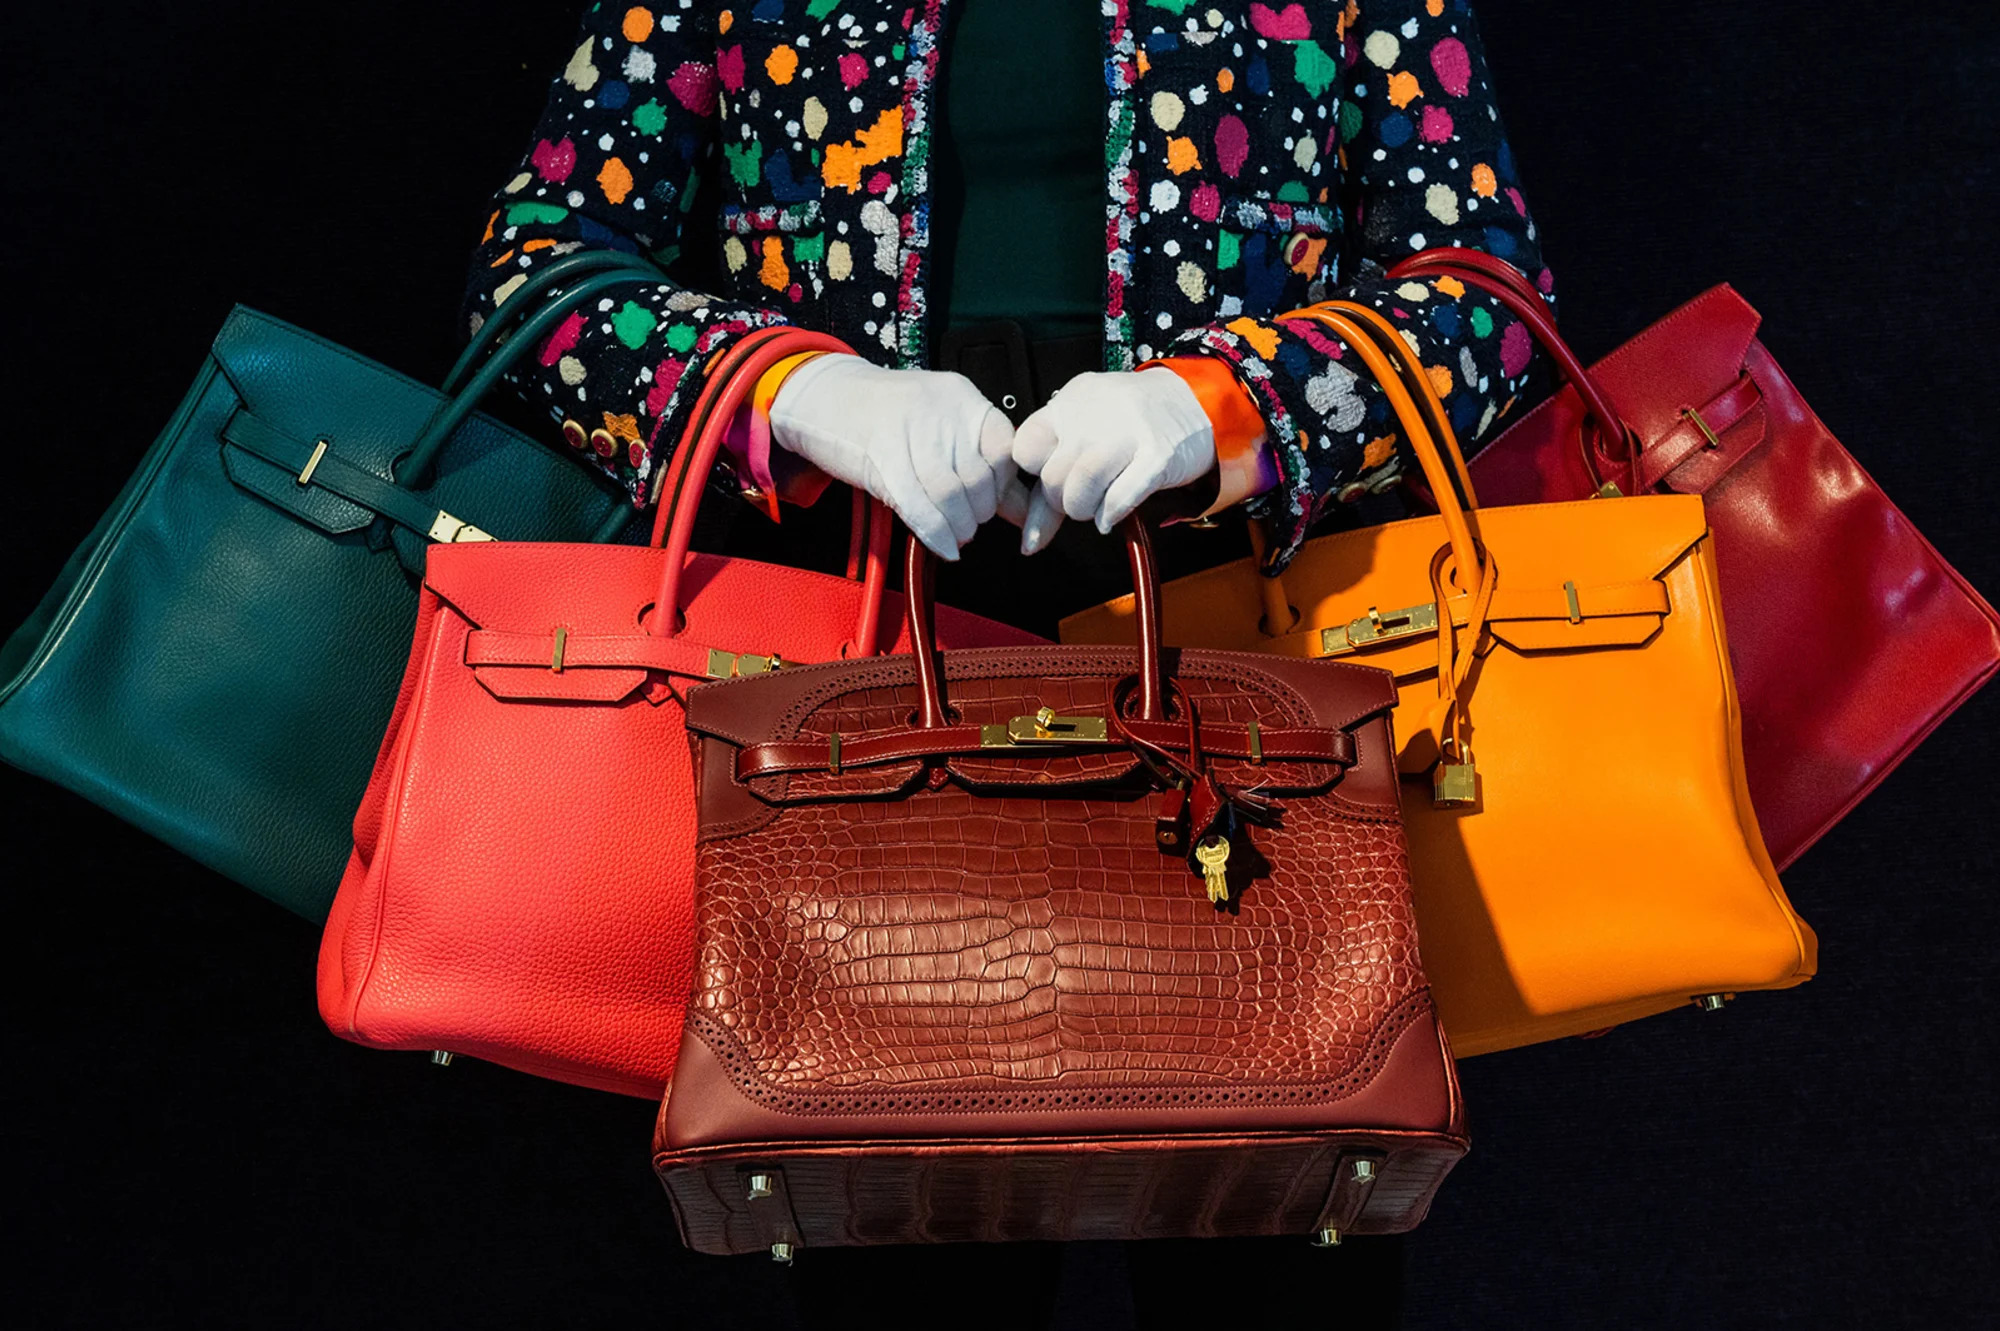 Hermès faces lawsuit over ‘refusal’ to sell Birkin bag